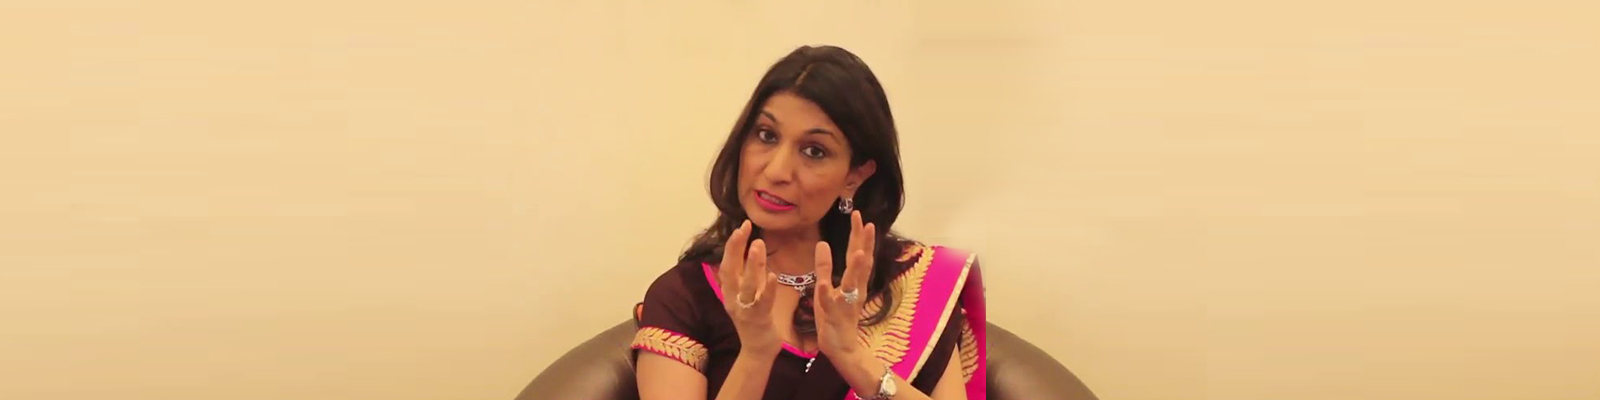 Fibroids Sepcialist in India - Dr Rishma Pai